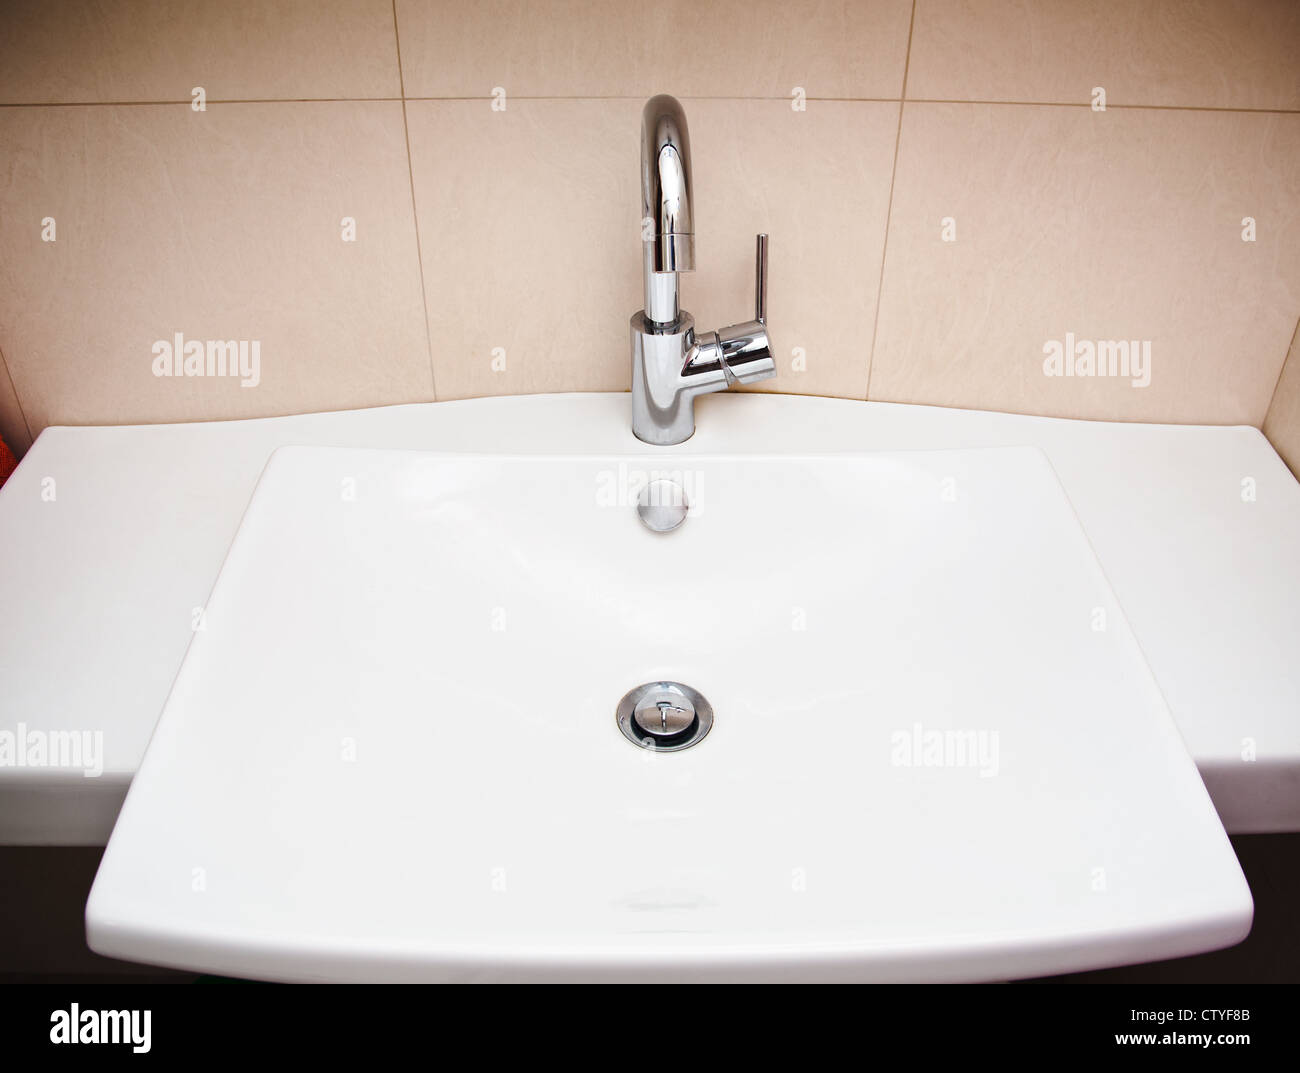 Modern bathroom sink in white ceramic Stock Photo